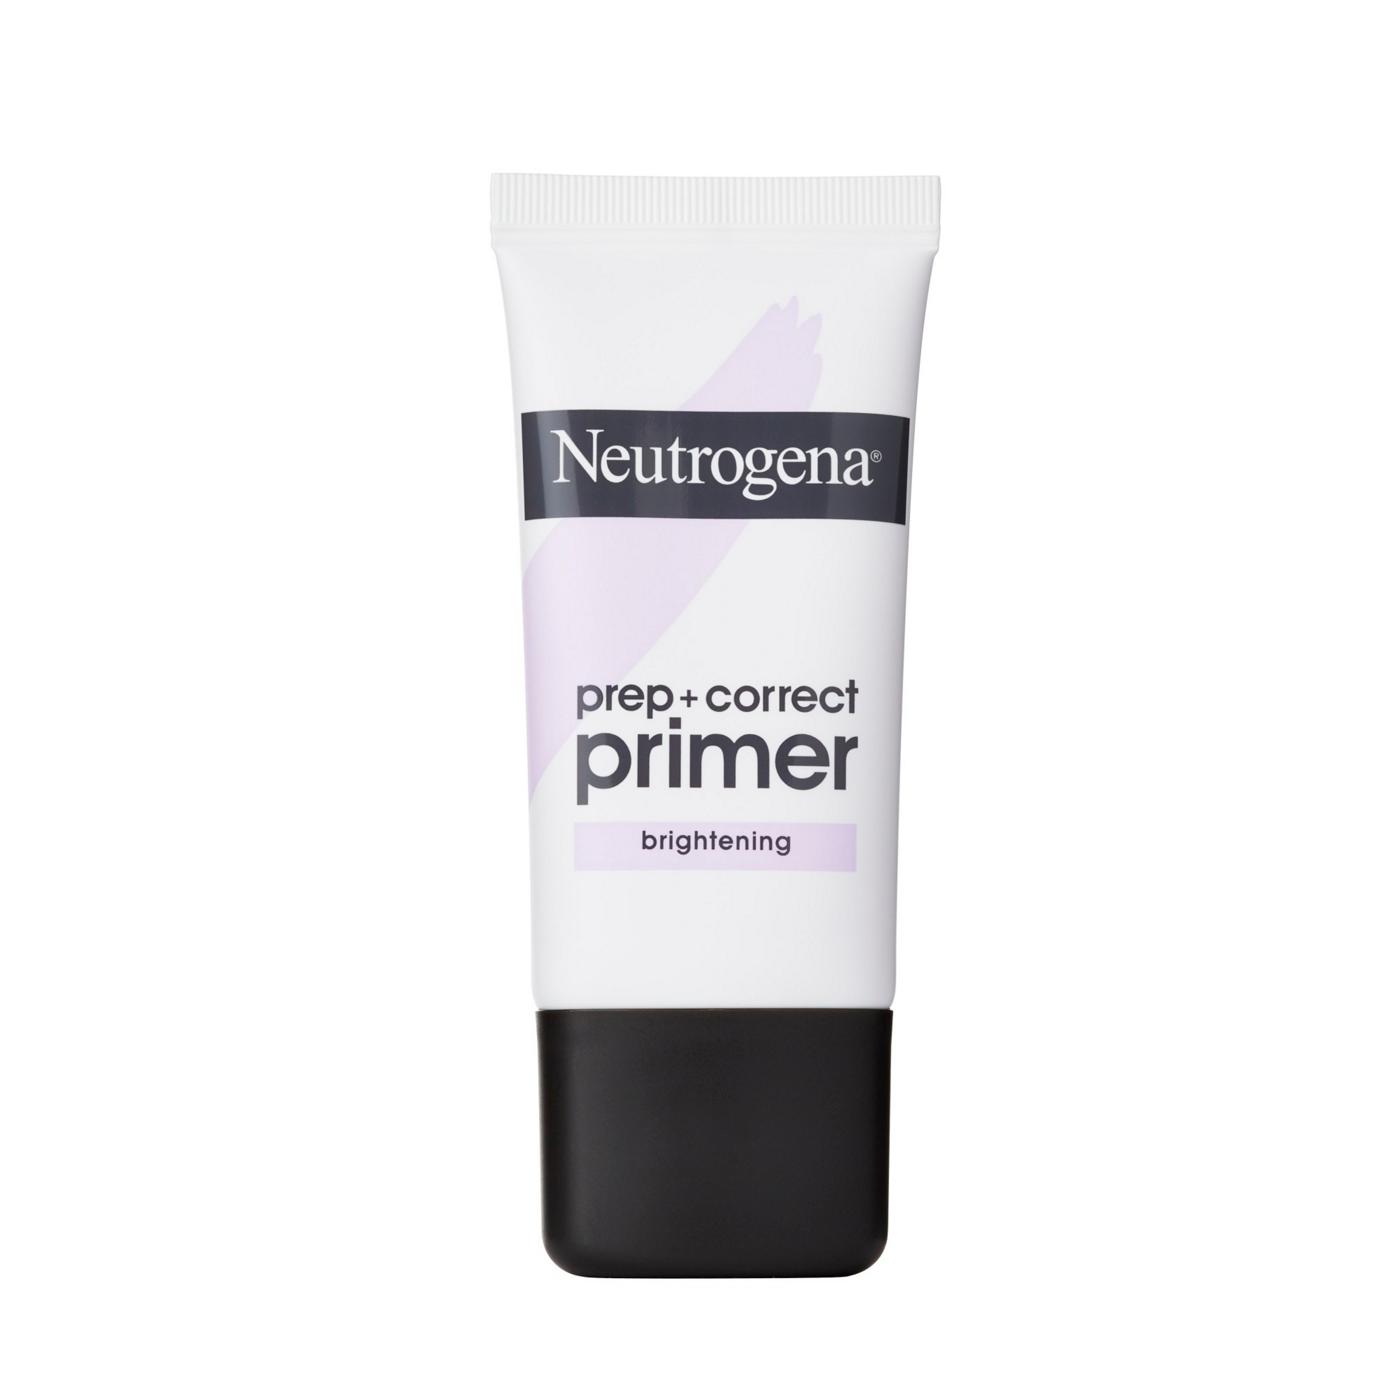 Neutrogena Healthy Skin Prep+Correct Primer Brightening; image 1 of 2